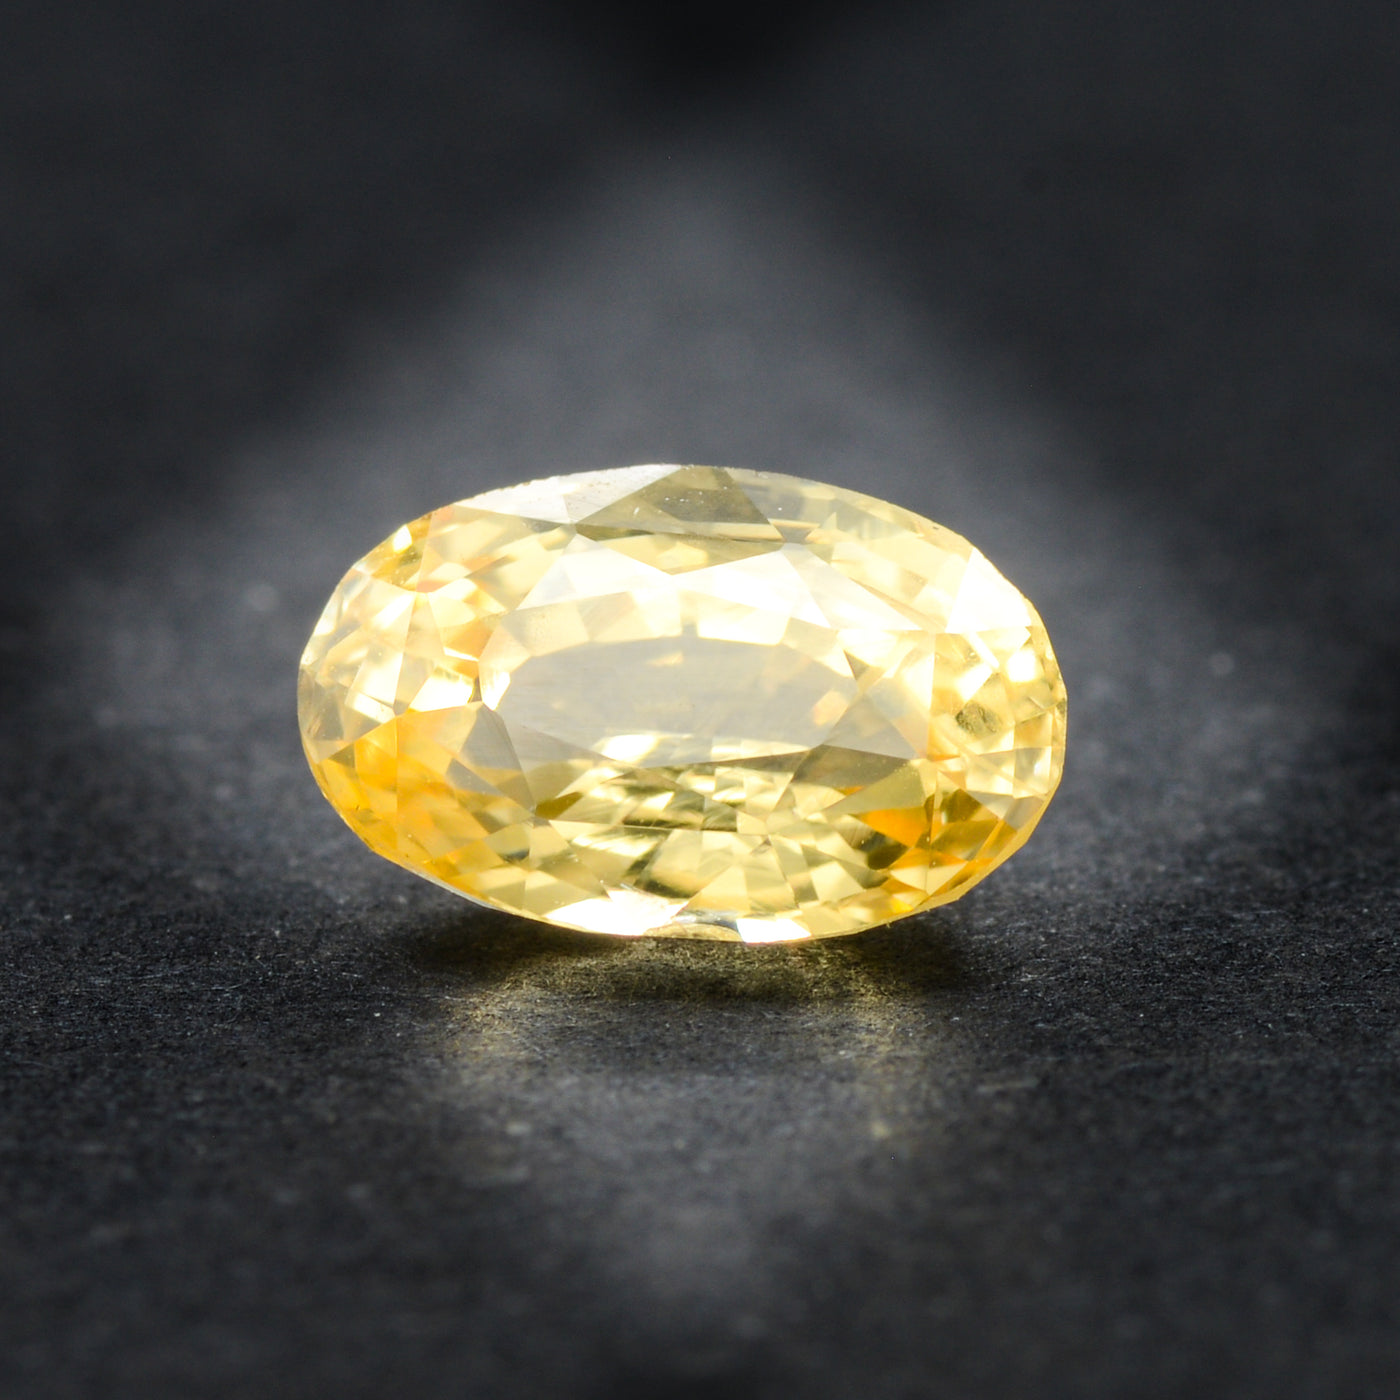 Saphir jaune 1.88 carats ovale non chauffé